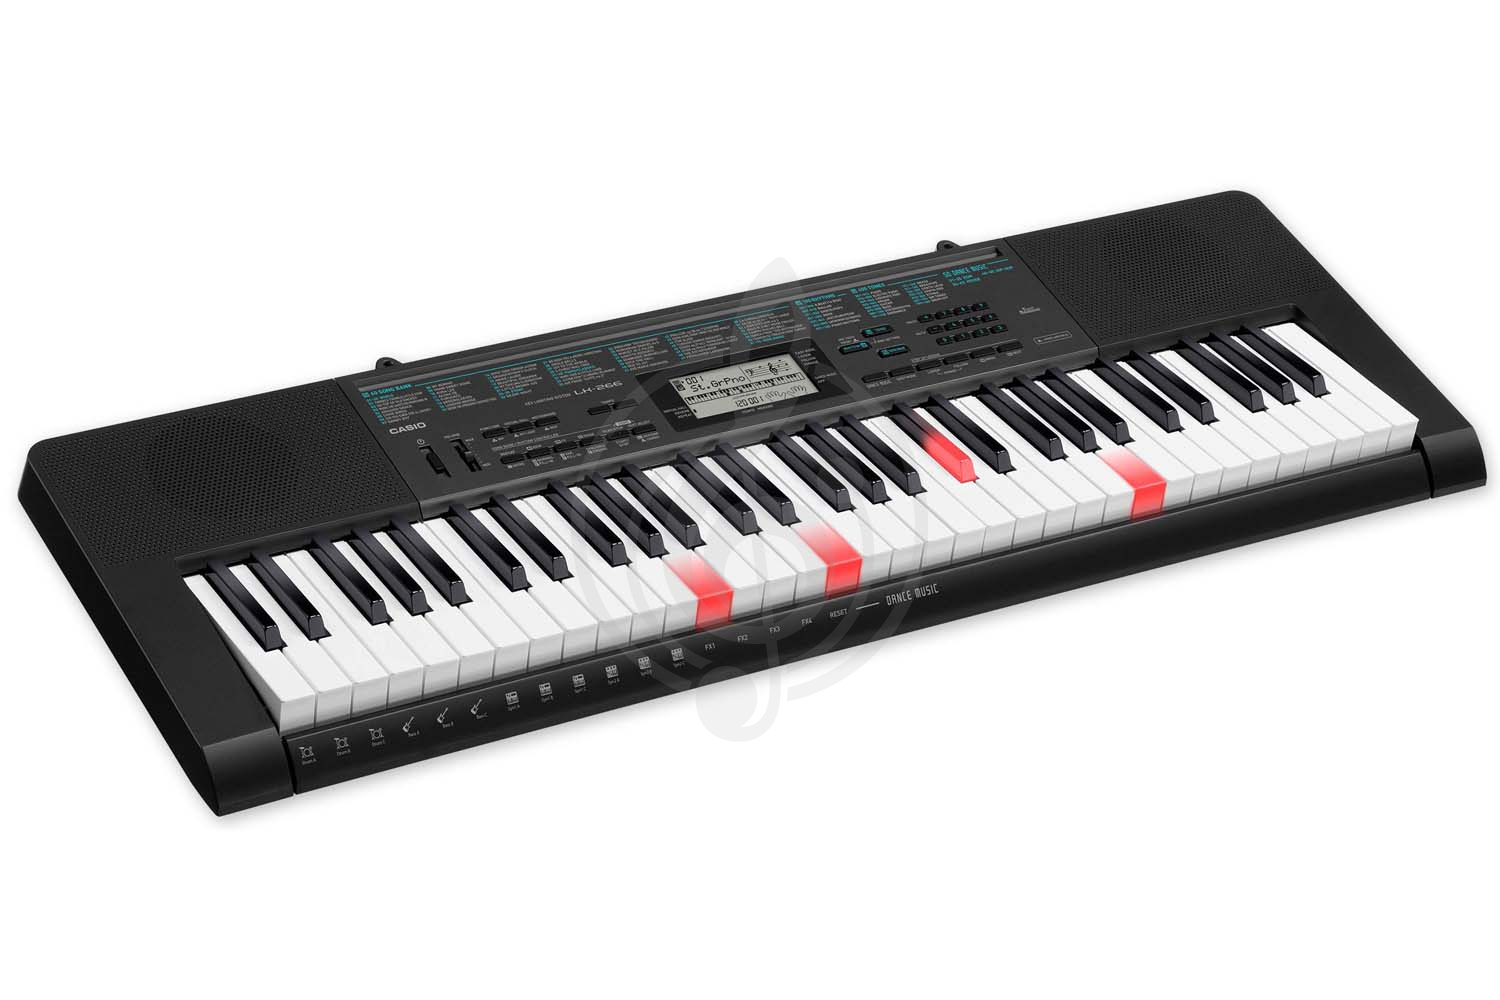 Домашний синтезатор Домашние синтезаторы Casio Casio LK-266 - цифровой синтезатор с подсветкой клавиш LK-266 - фото 1